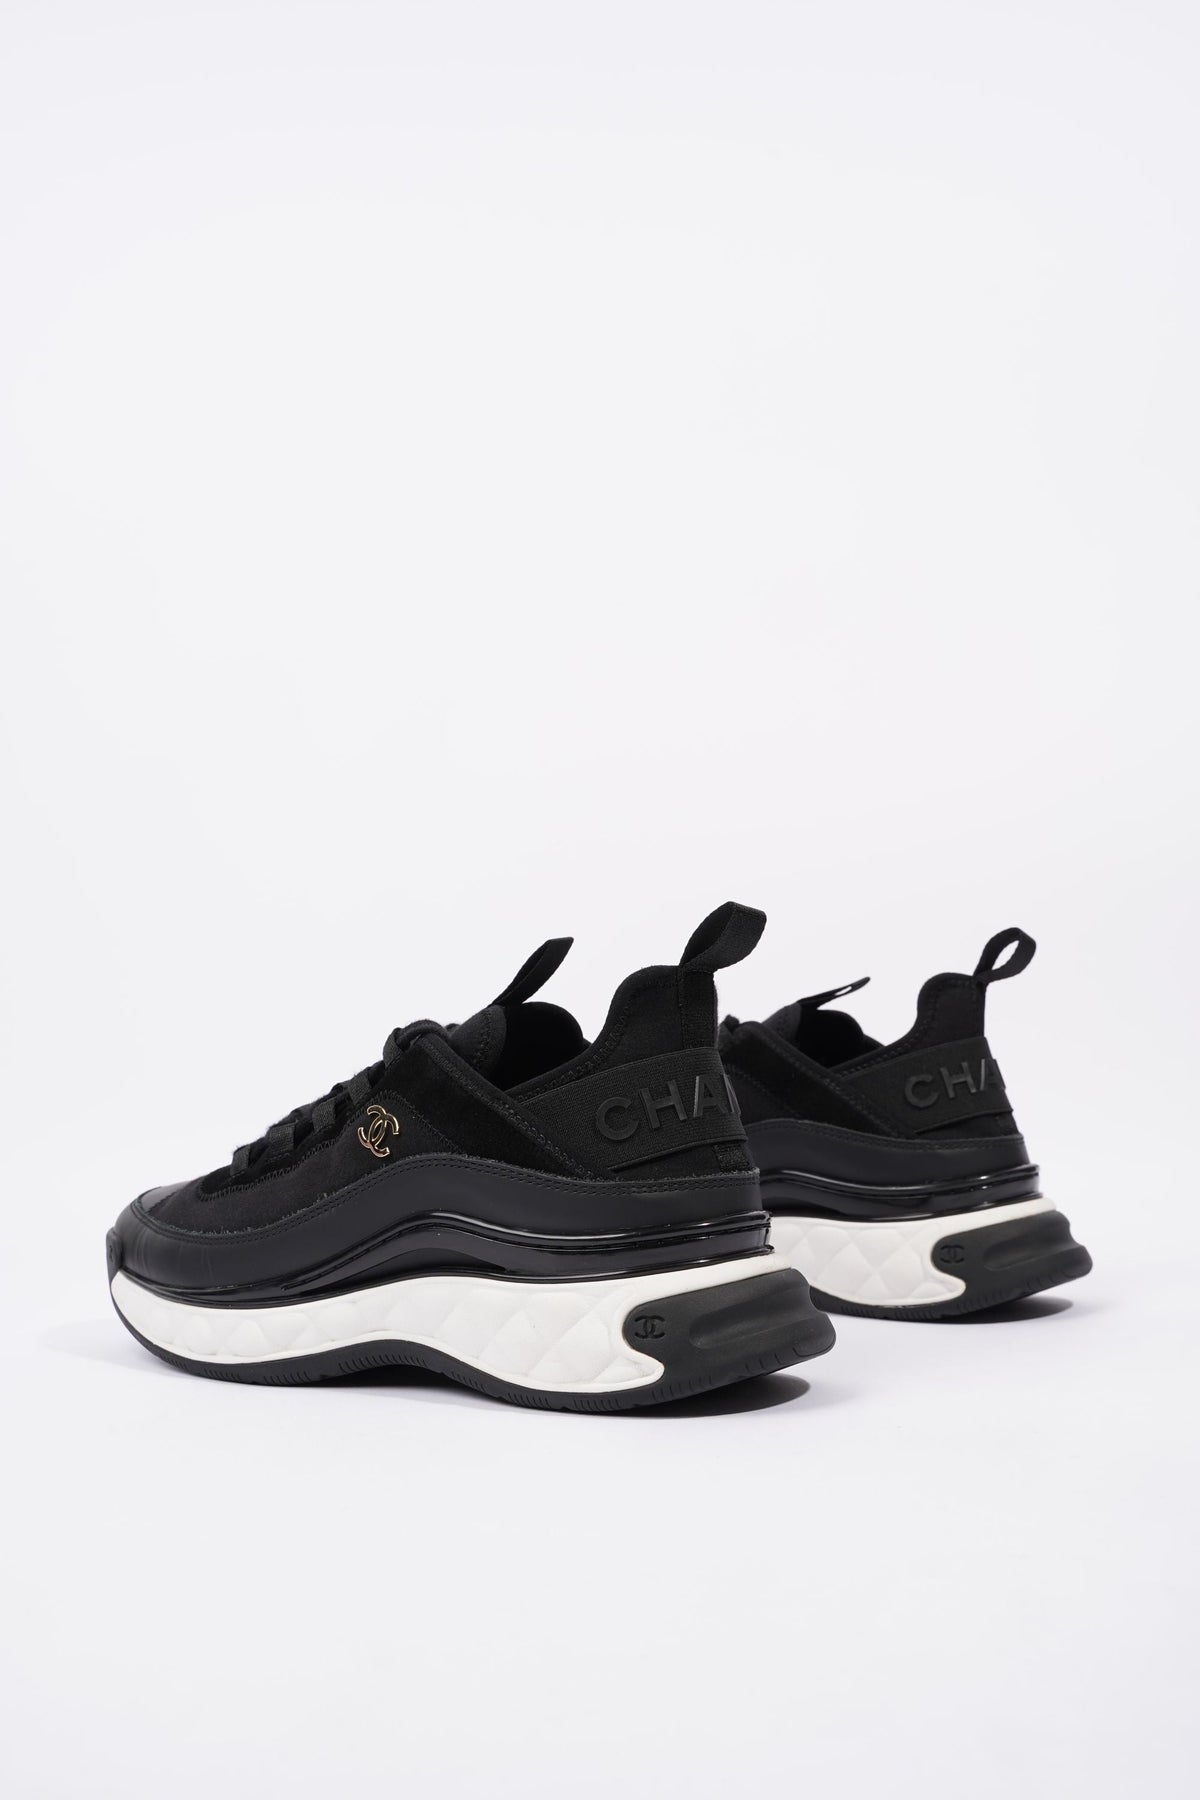 Pre Owned Women's Velvet Calfskin Mixed Fibers Chanel Sneakers size 38 Black